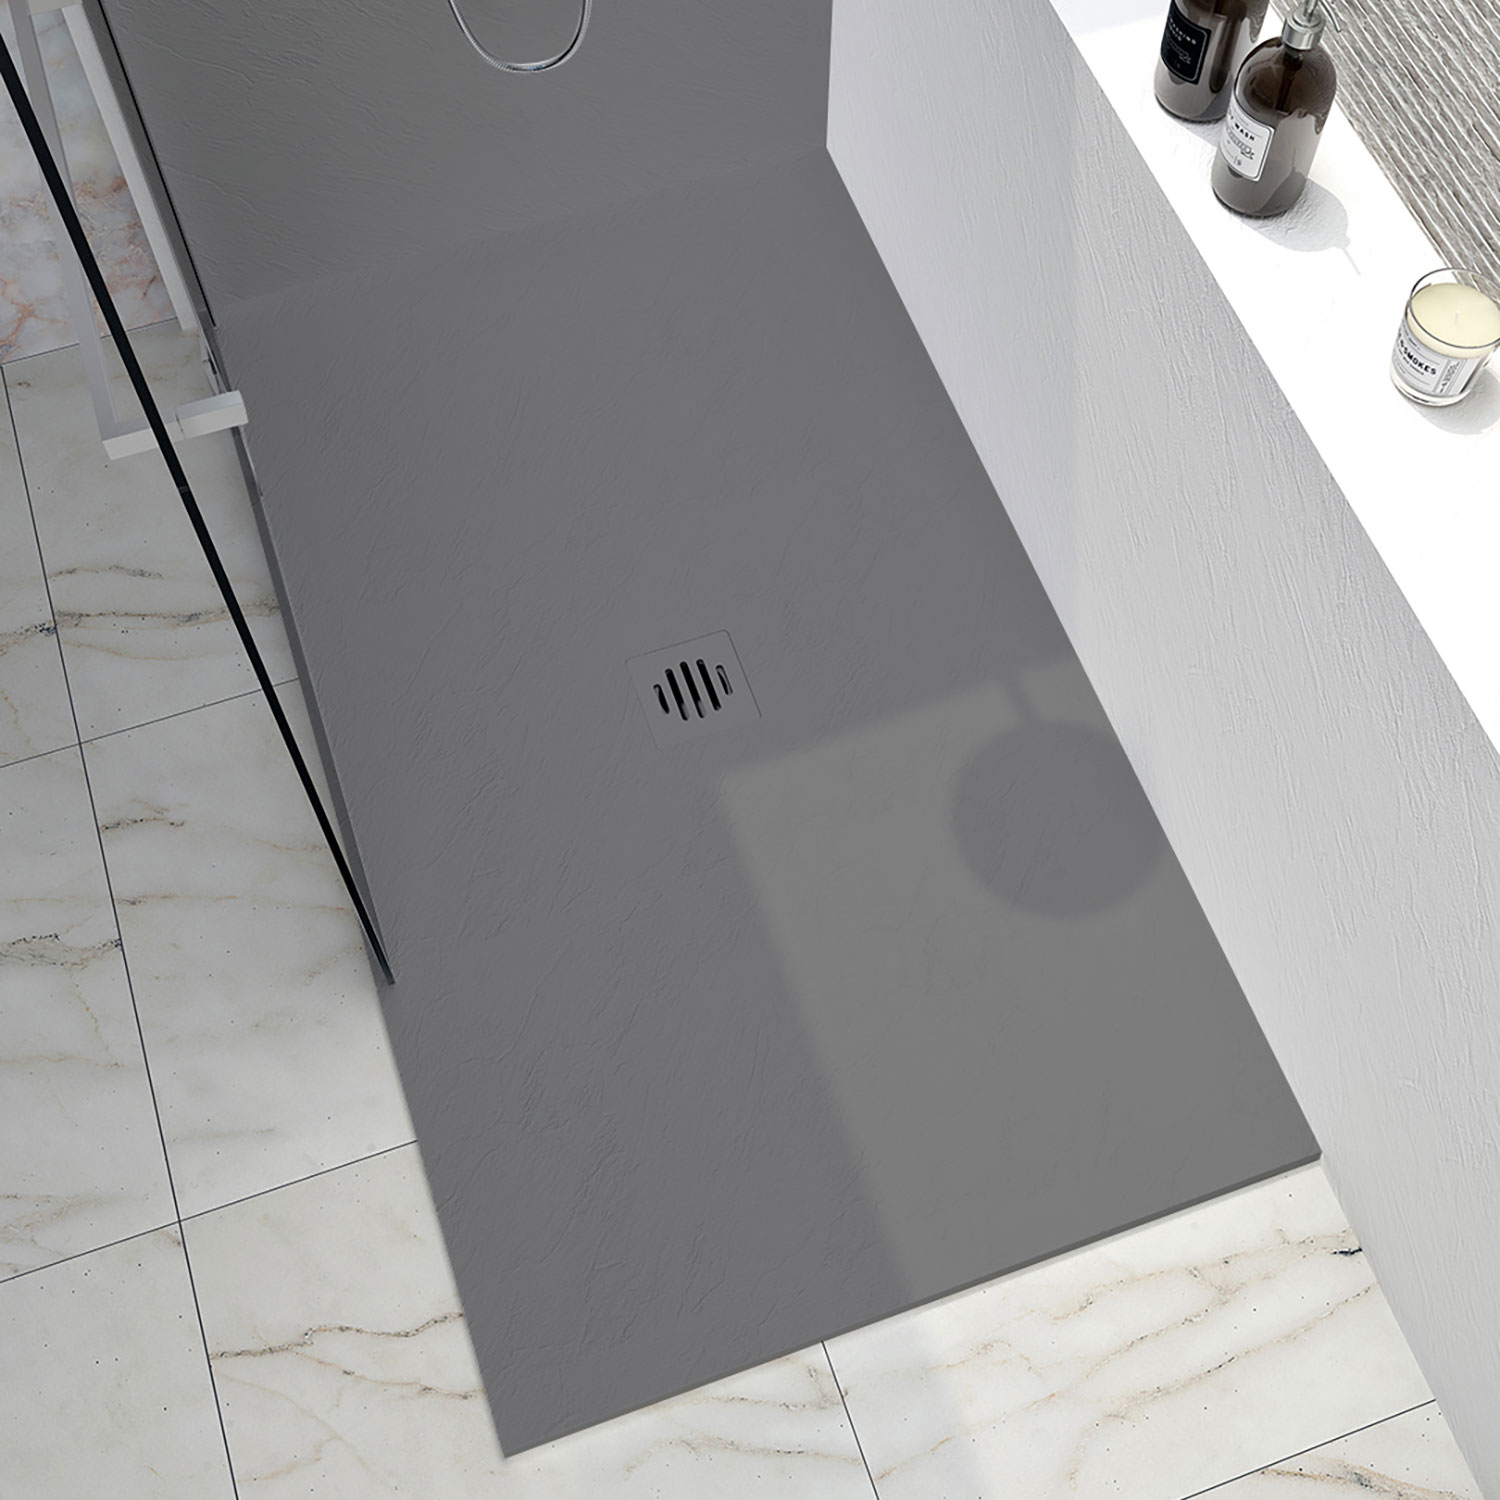 Shower base Slate 42 x 42, custom-made tile flange installation, in concrete grey